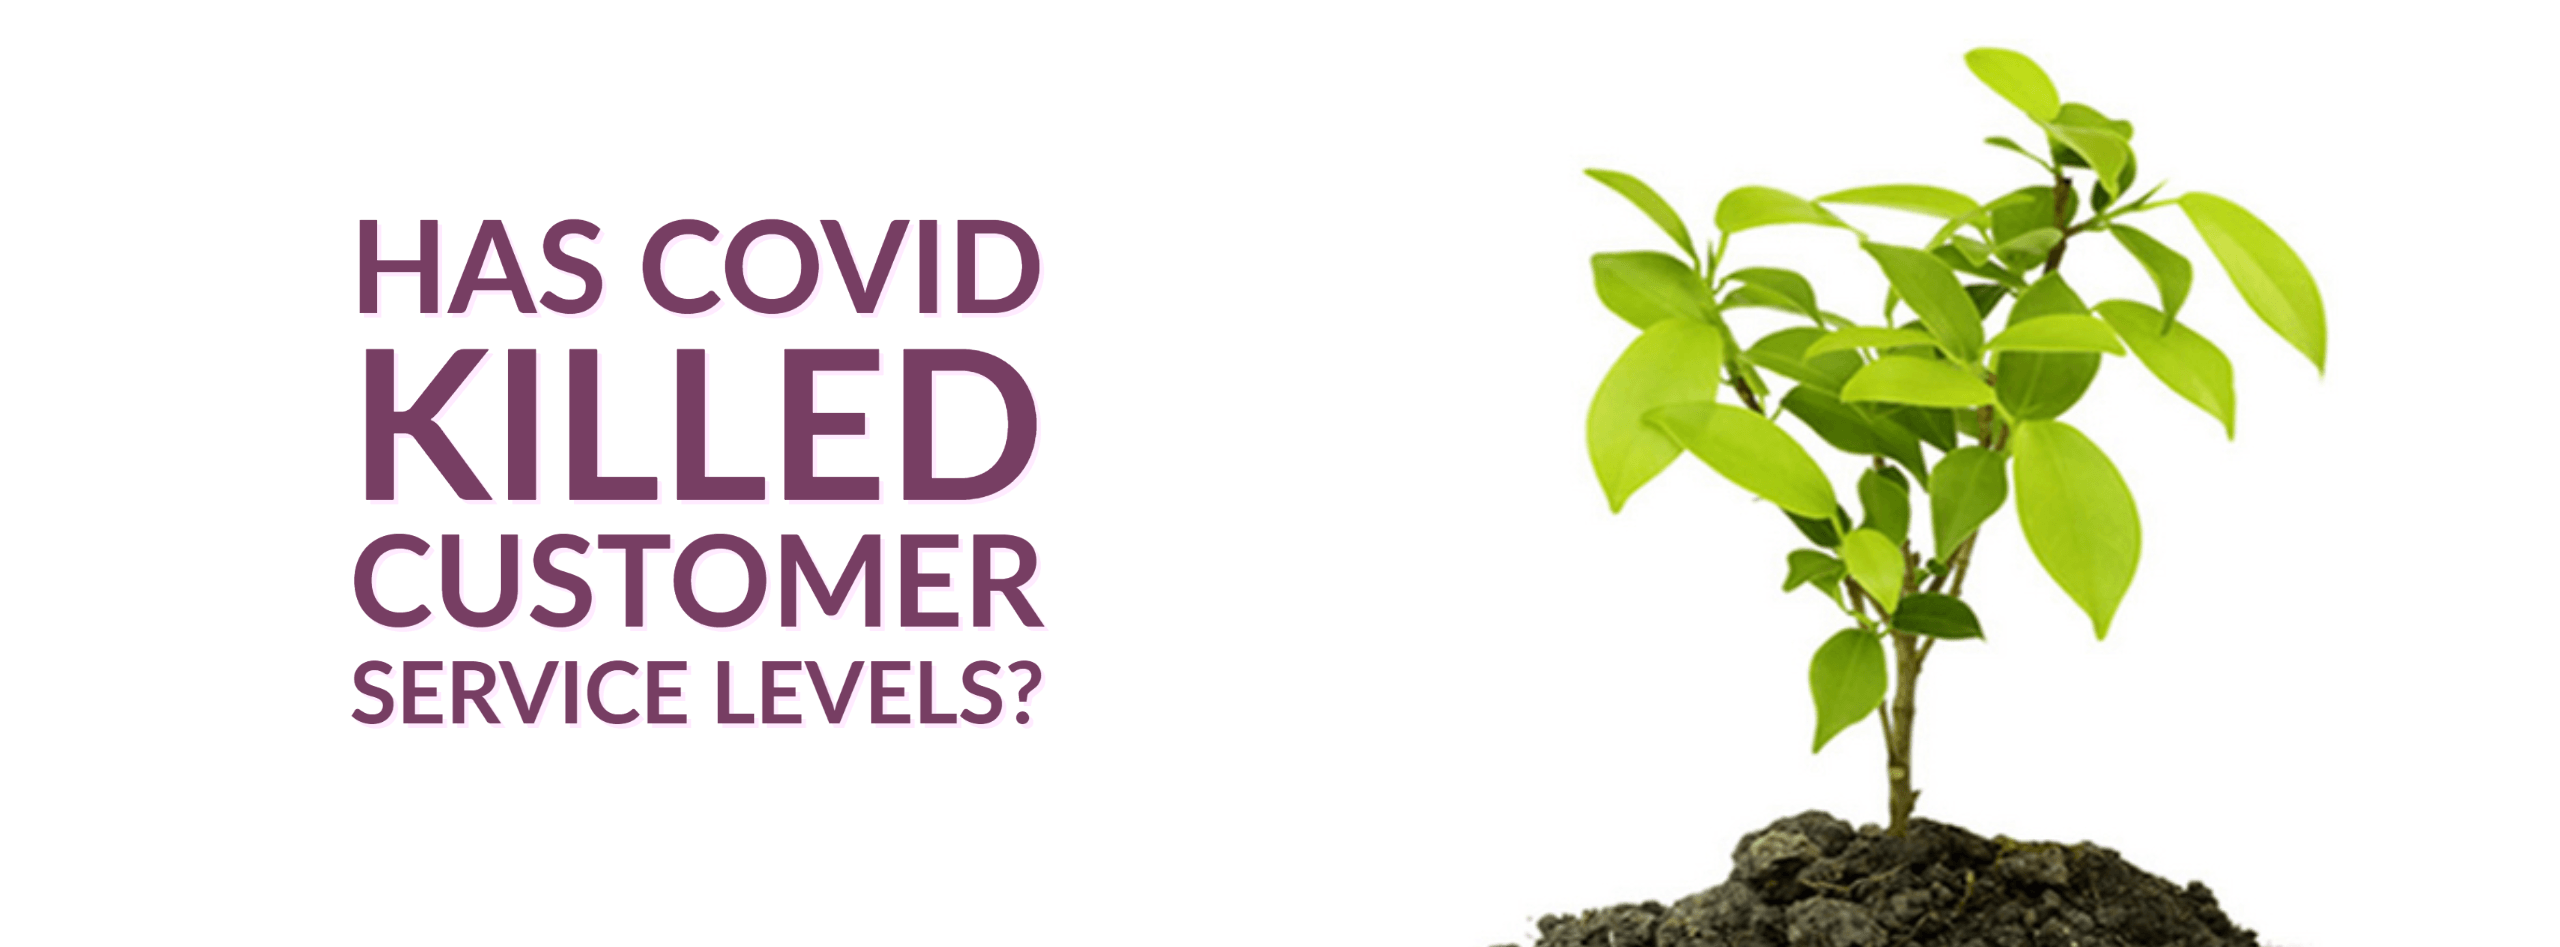 Has COVID killed customer service levels?